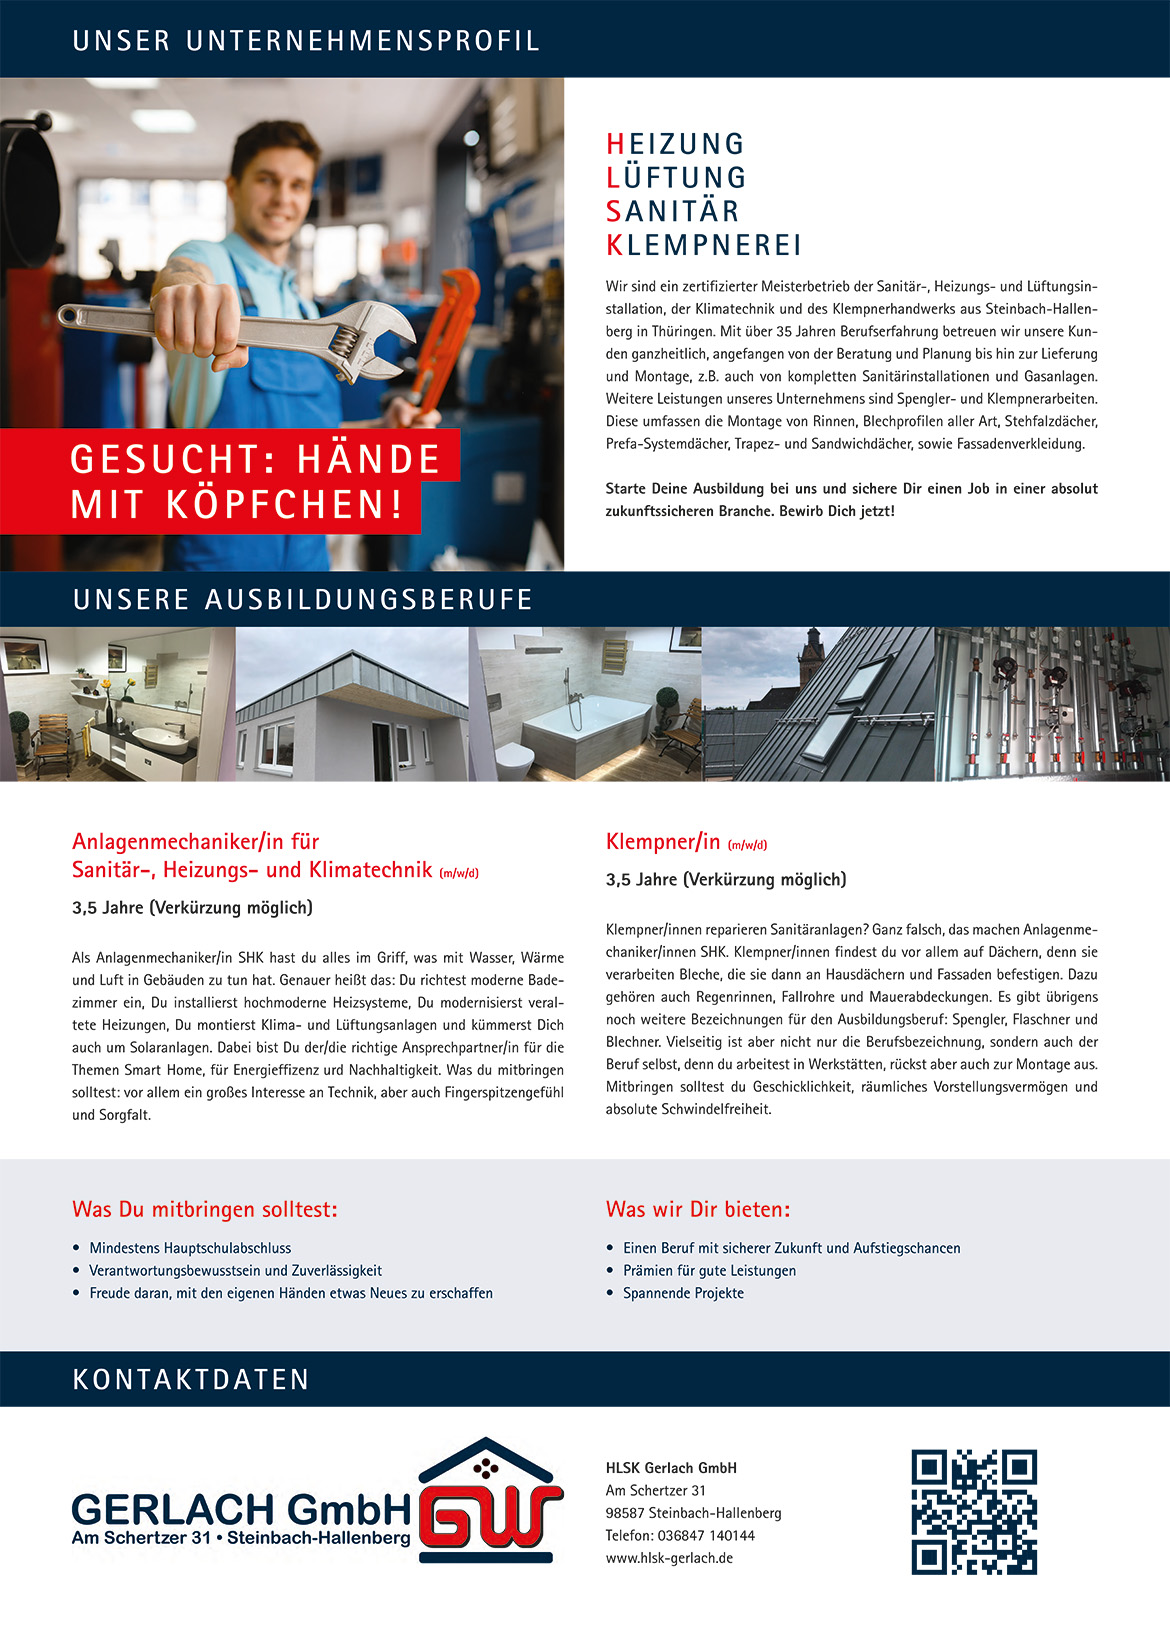 Ausbildungsplakat: HLSK Gerlach GmbH